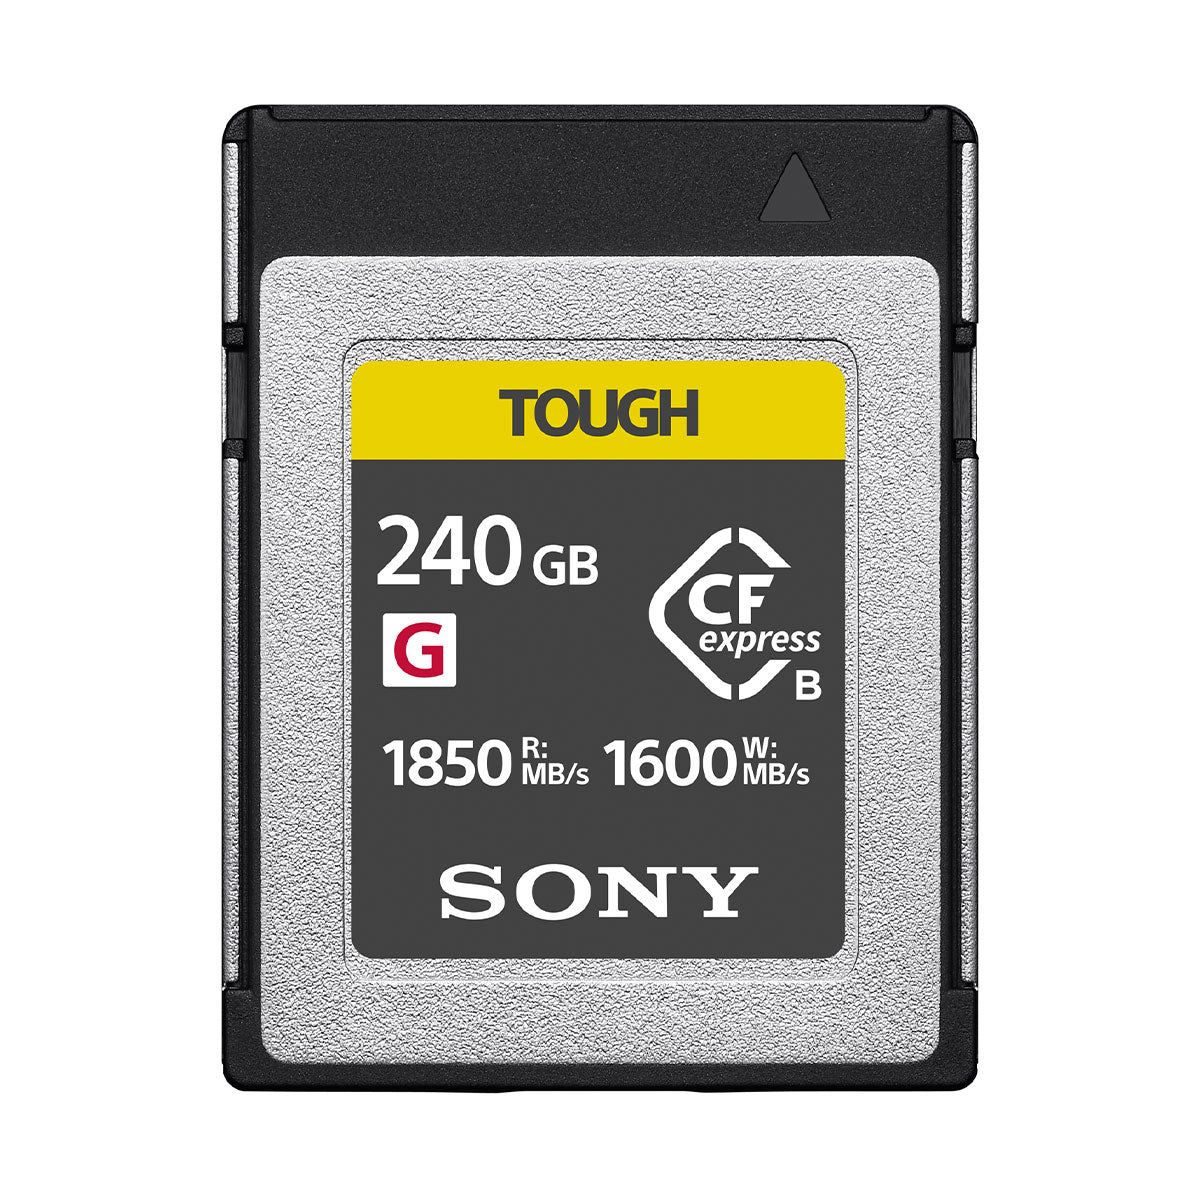 Sony 240GB CFexpress Type B TOUGH Memory Card